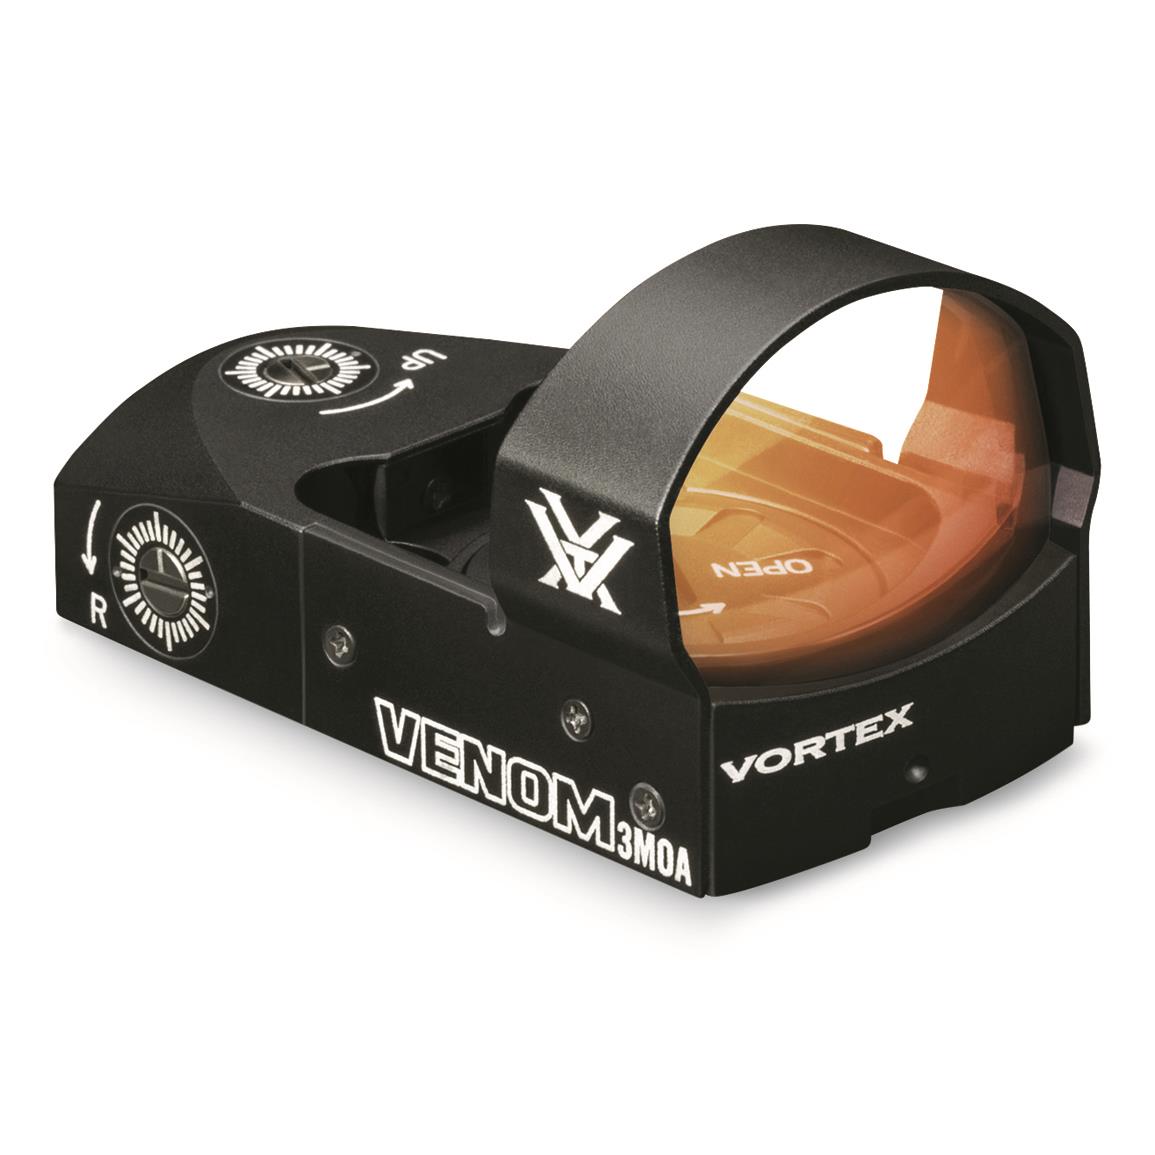 Vortex Venom 3 MOA Waterproof Red Dot Sight